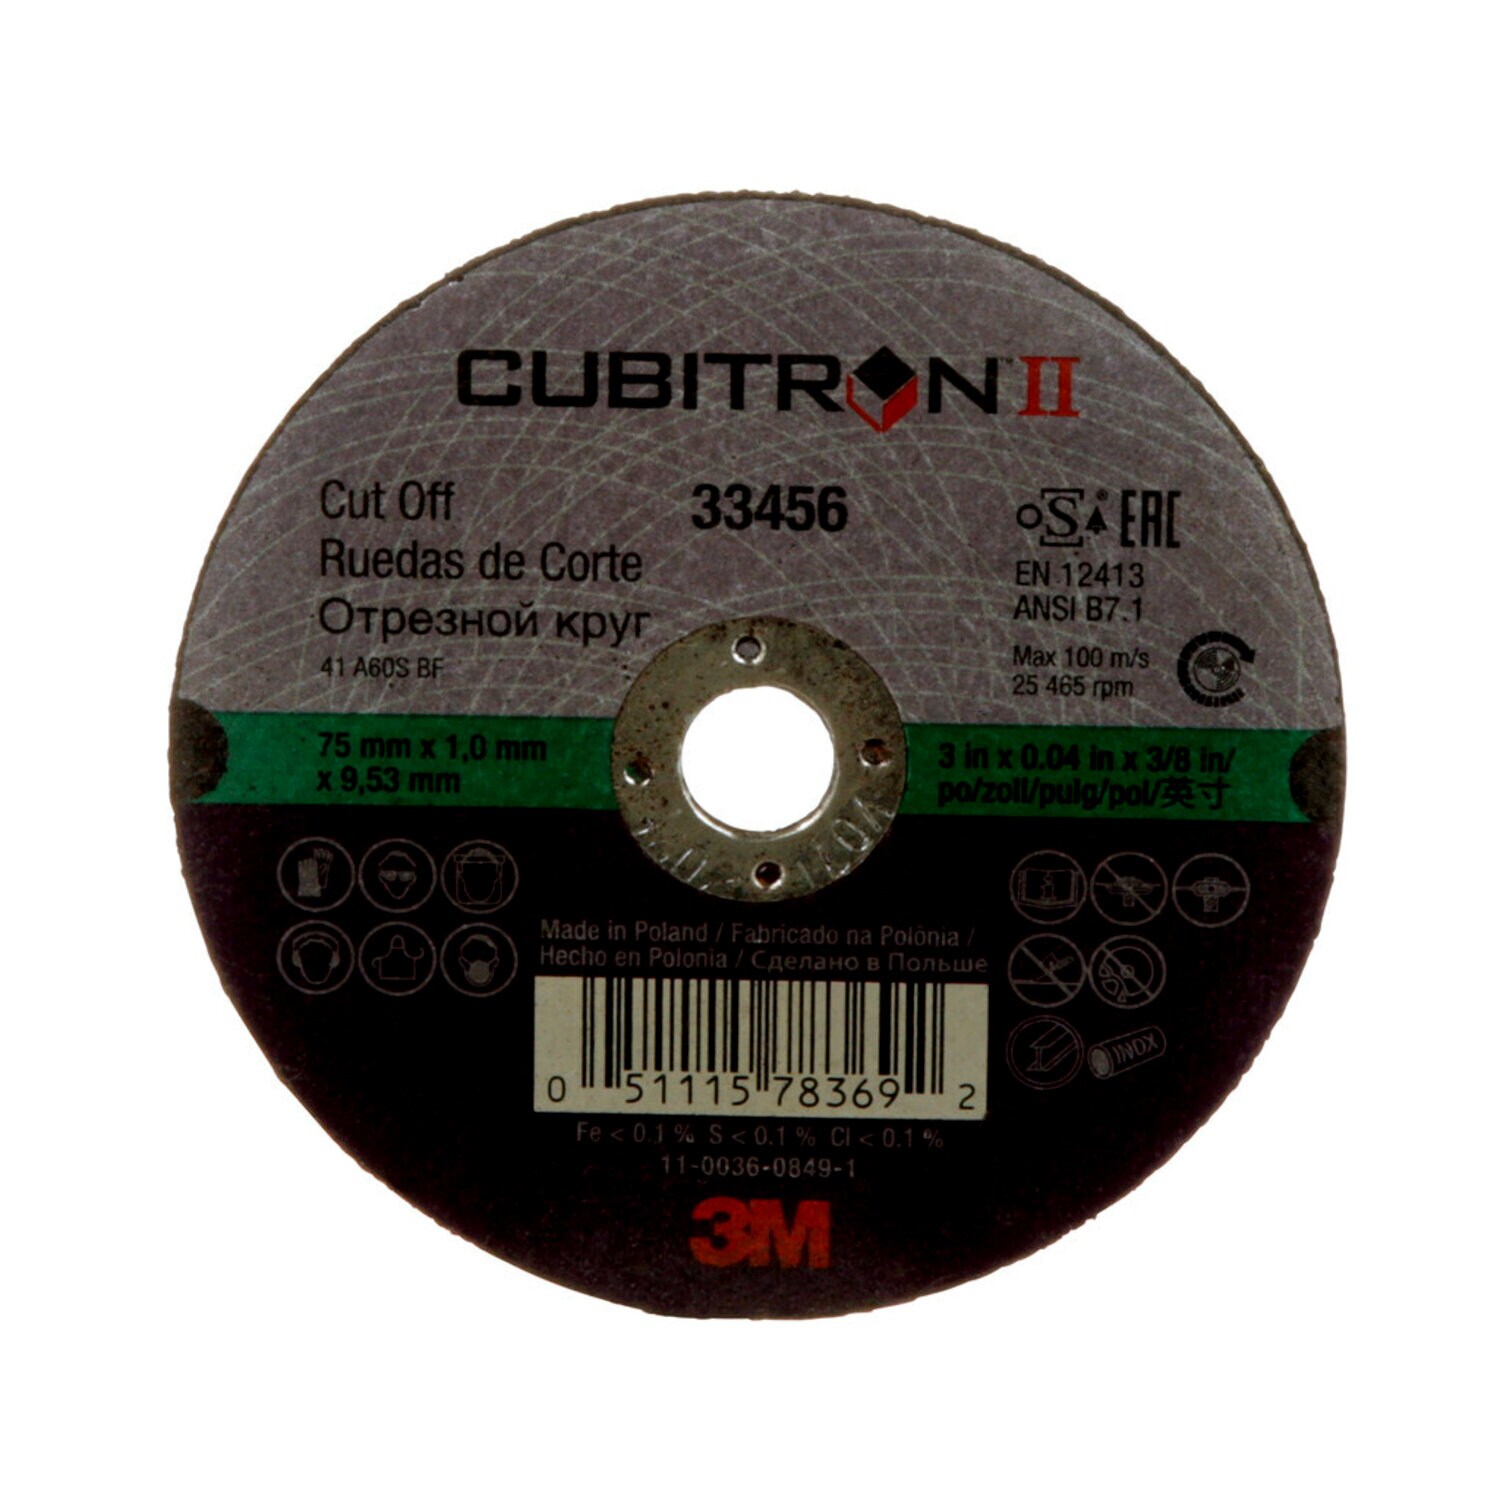 7100032406 - 3M Cubitron II Cut-Off Wheel, 33456, 75 mm x 1 mm x 9.53 mm (3 in x
.04 in x 3/8 in), 5 wheels per carton, 6 cartons per case